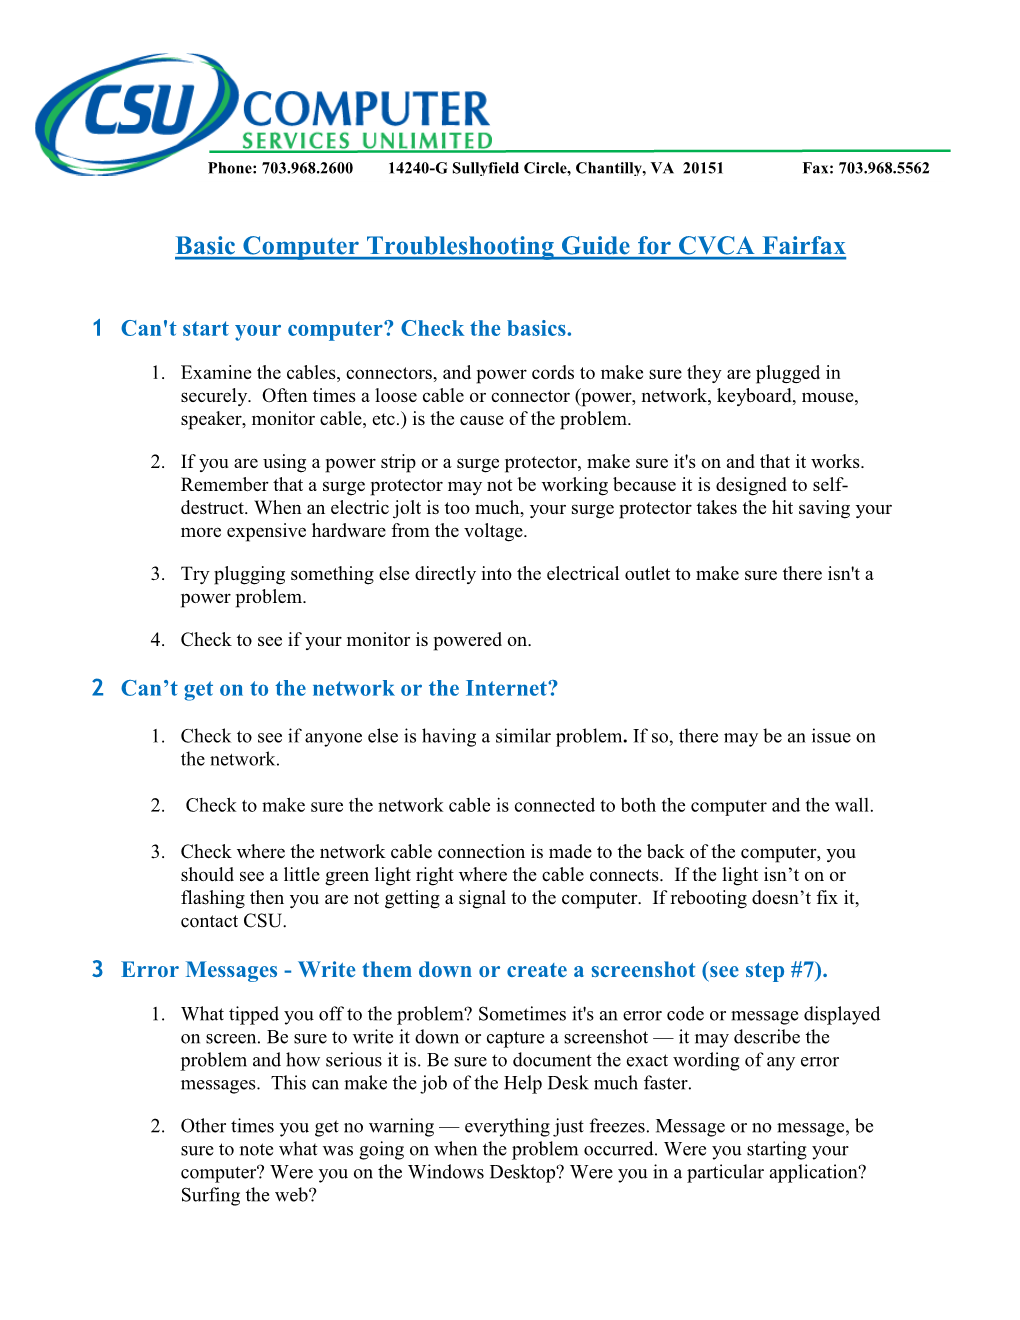 Basic Computer Troubleshooting Guide for CVCA Fairfax